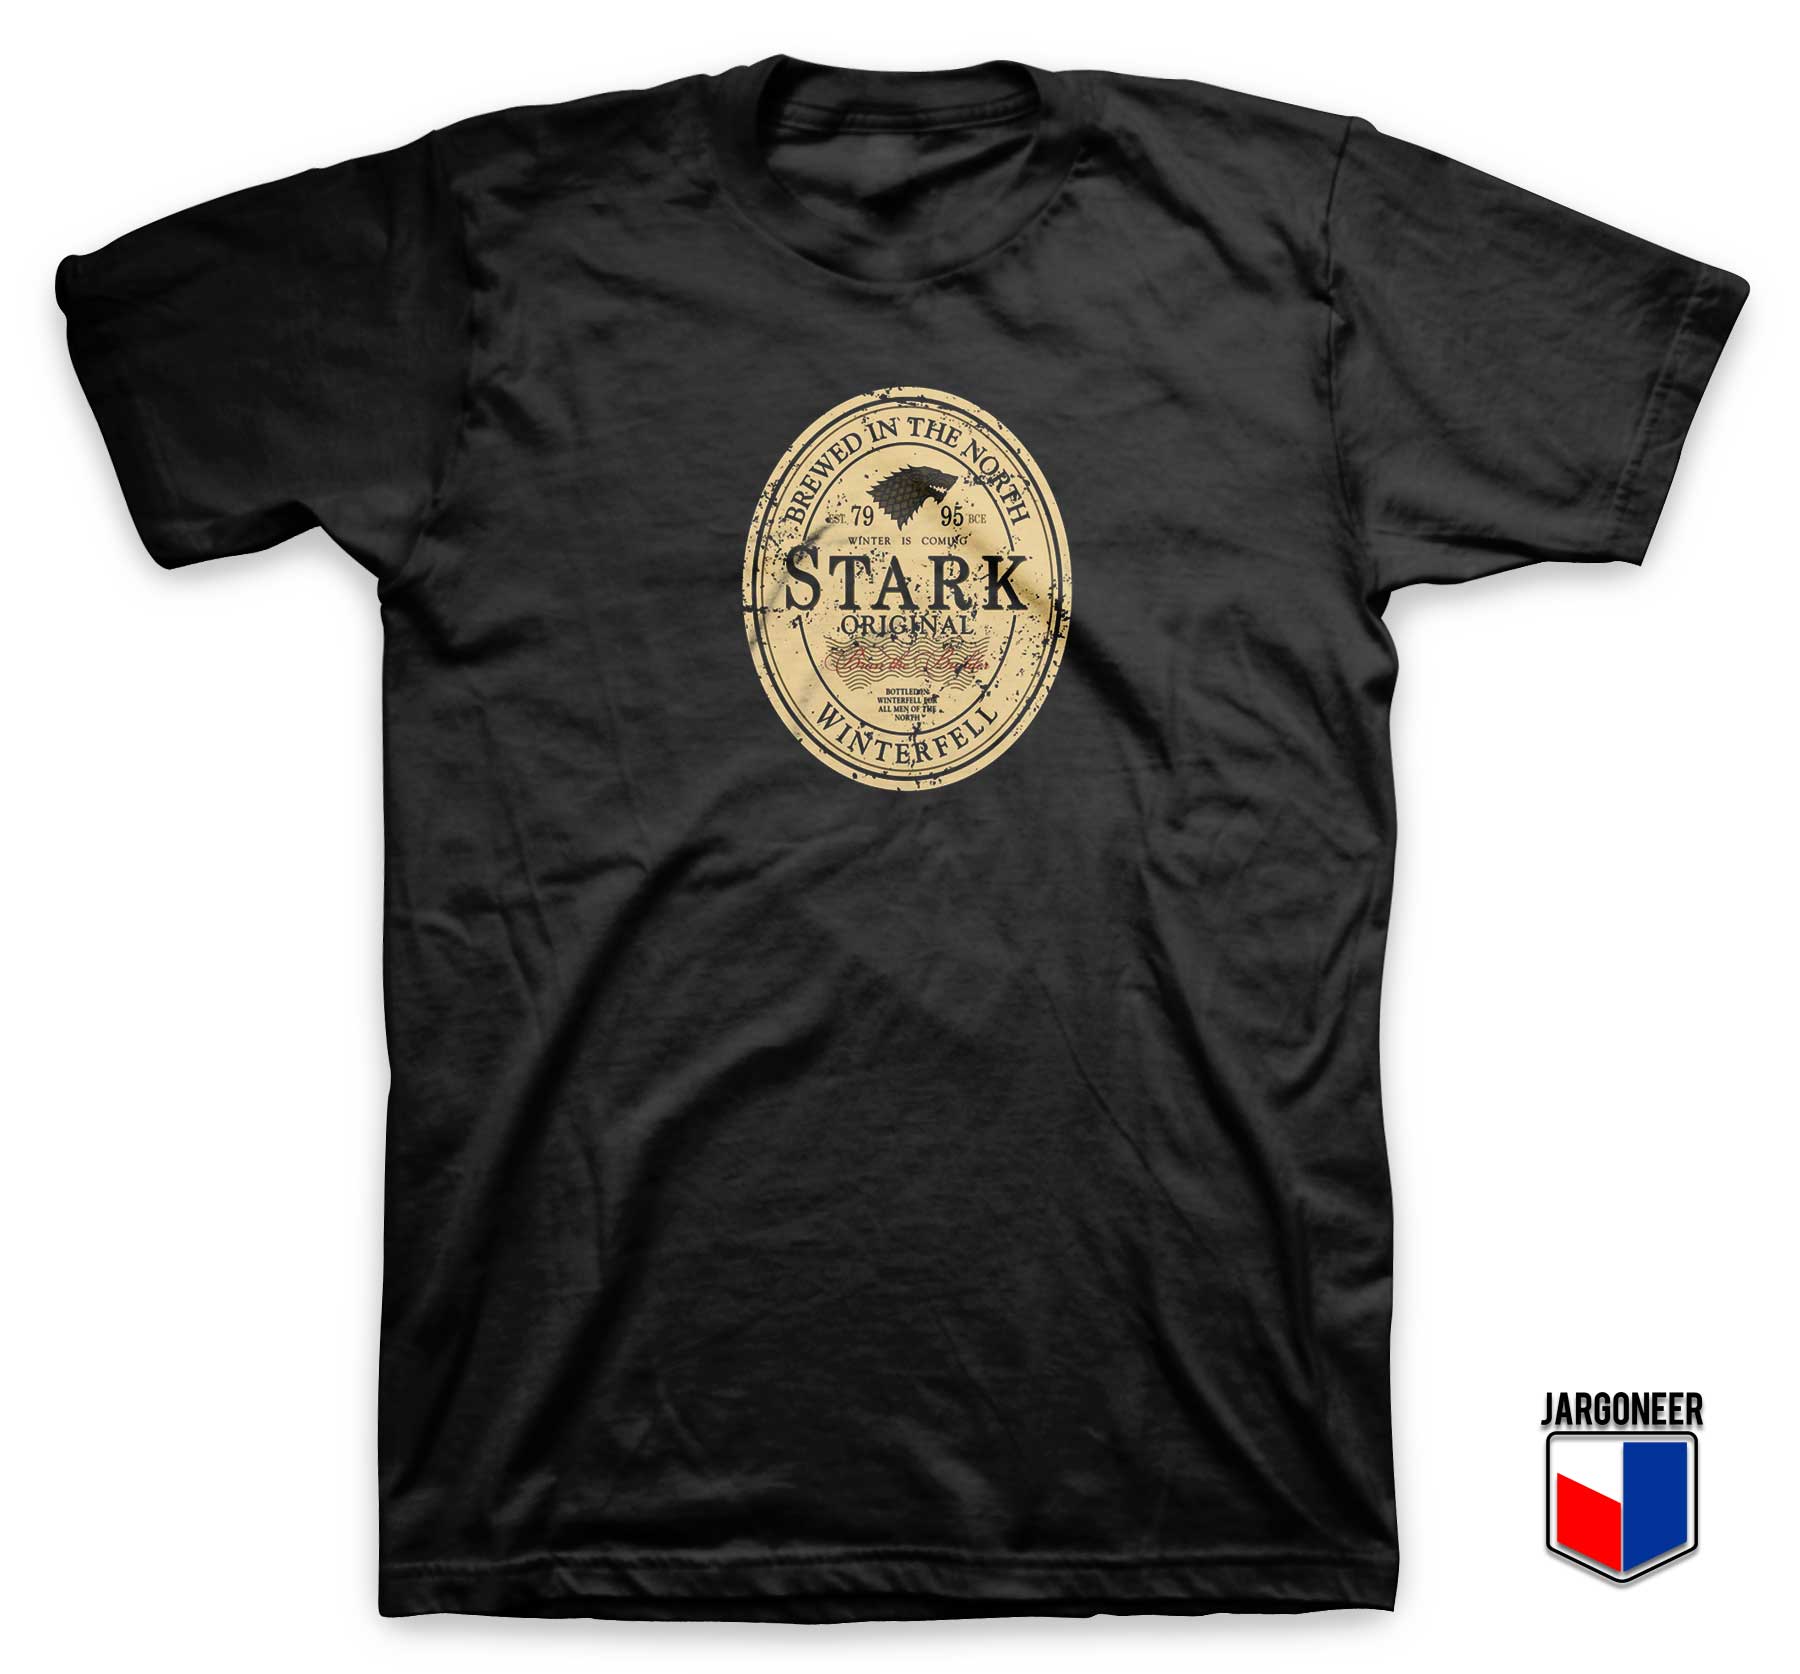 Stark Original Brew Beer T Shirt - Shop Unique Graphic Cool Shirt Designs